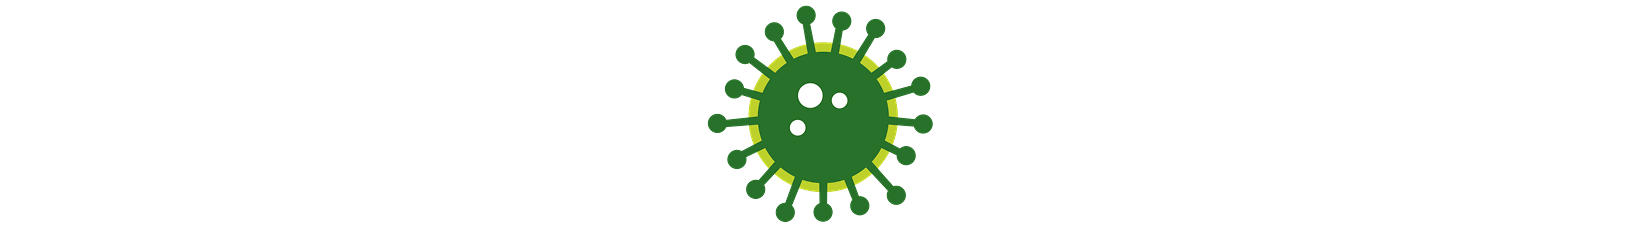 COVID-19病毒的圖形